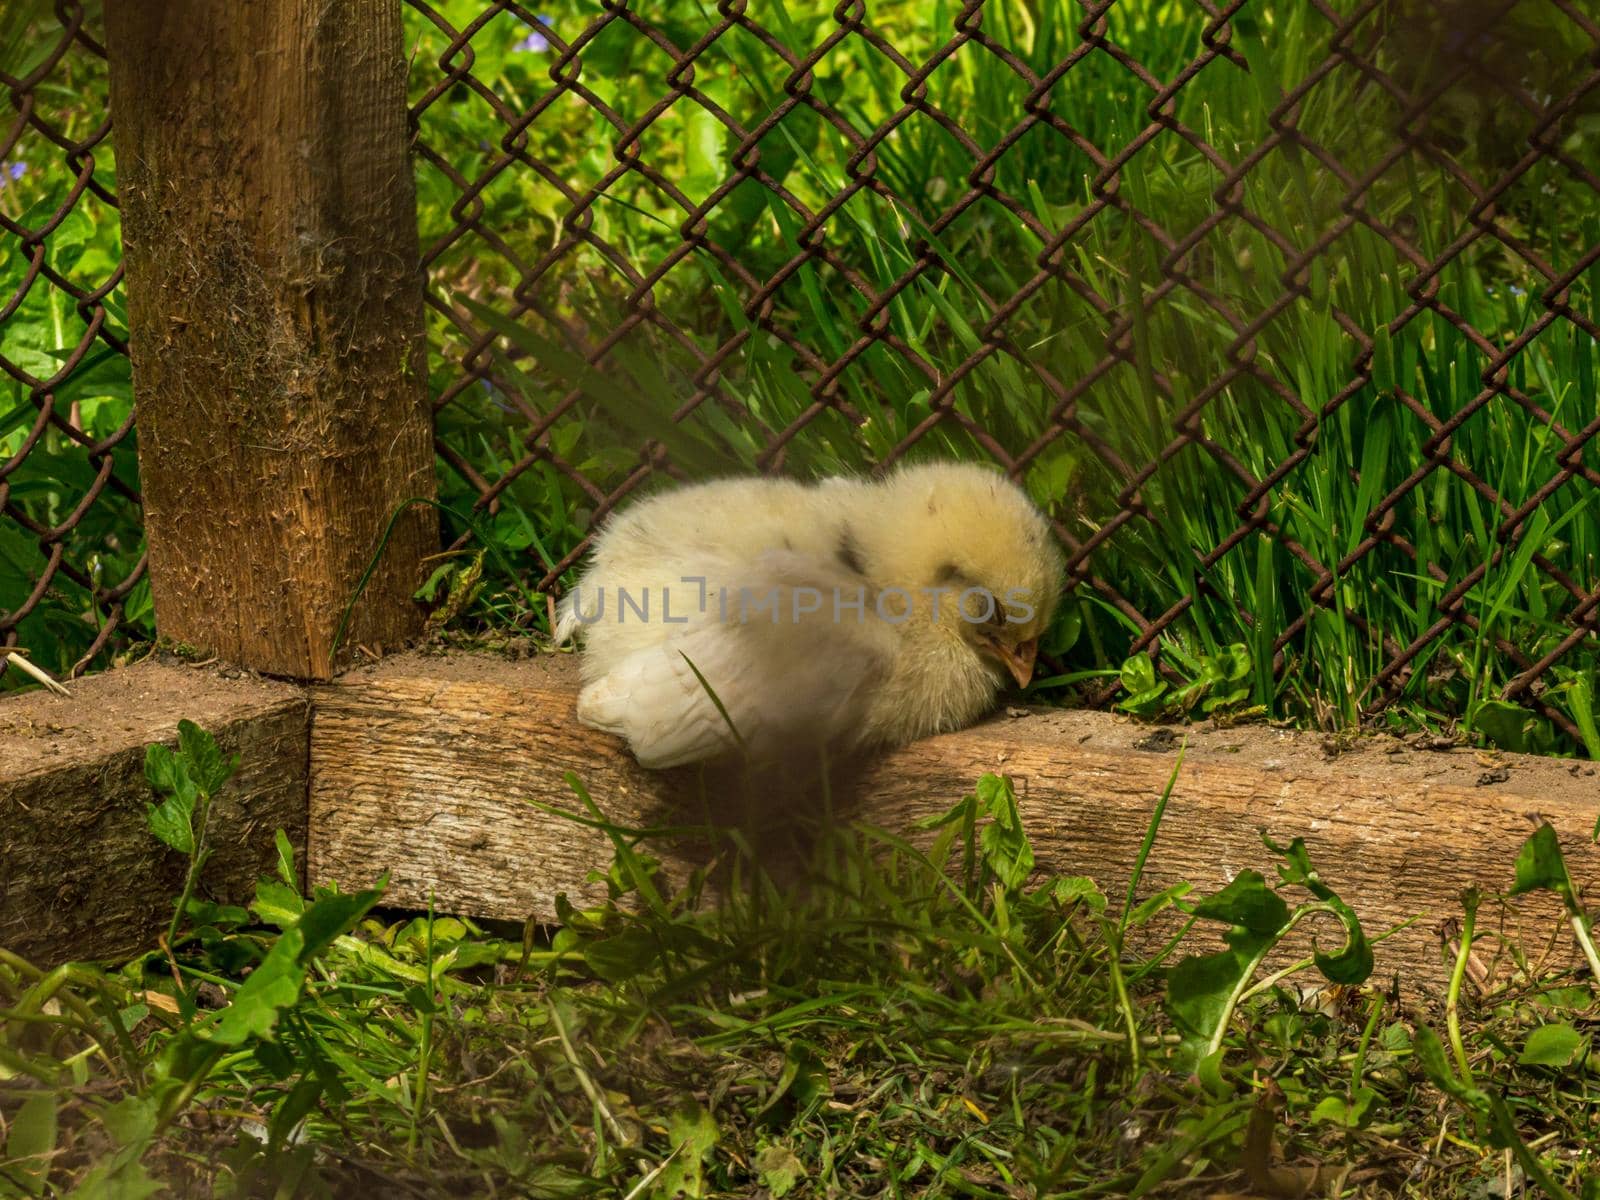 Little chicken fluffy yellow baby chick sleeping